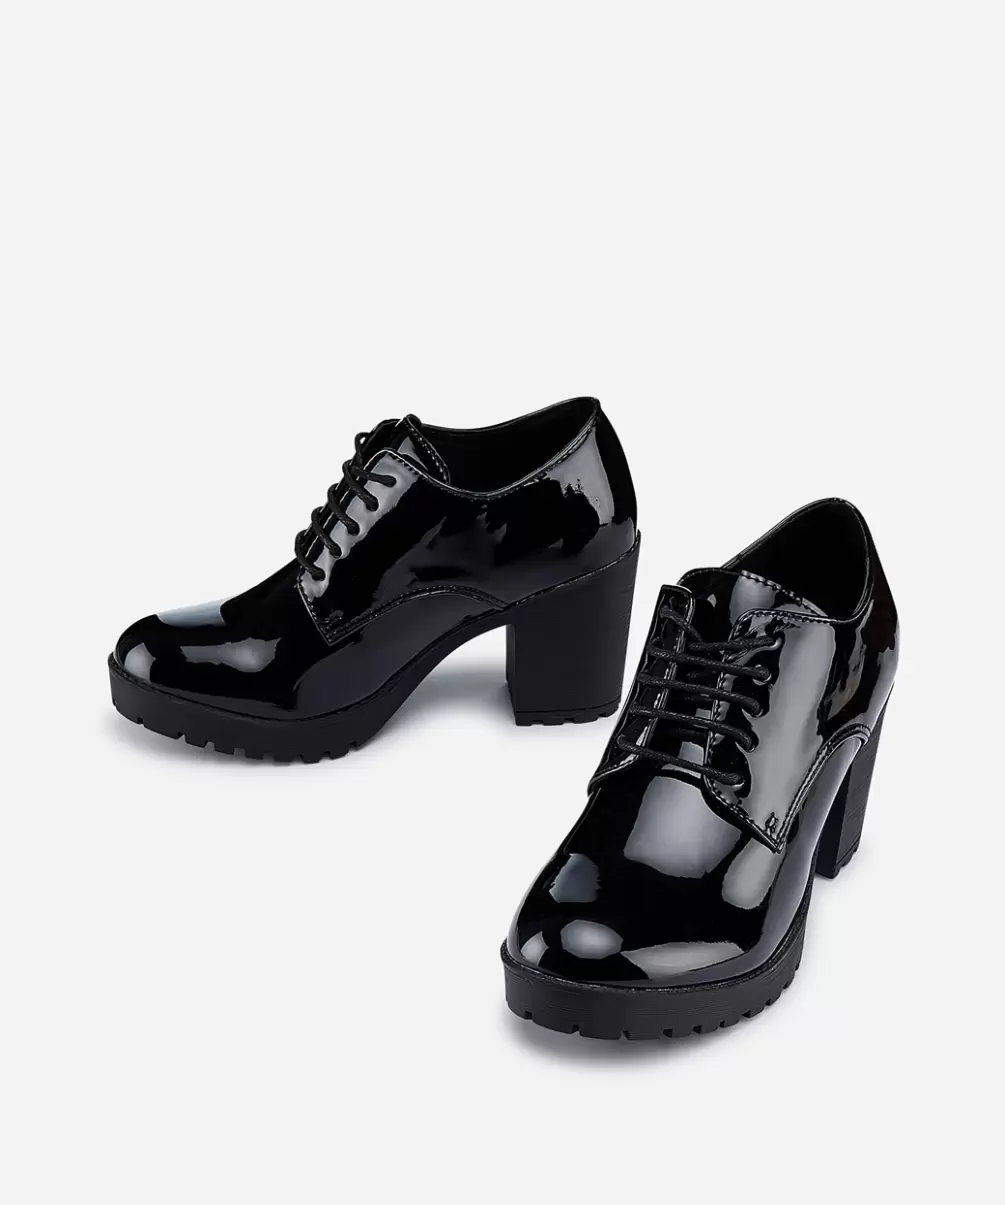 Marypaz Mujer Zapatos De Tacón Zapato Tacón Cordones Efecto Negros